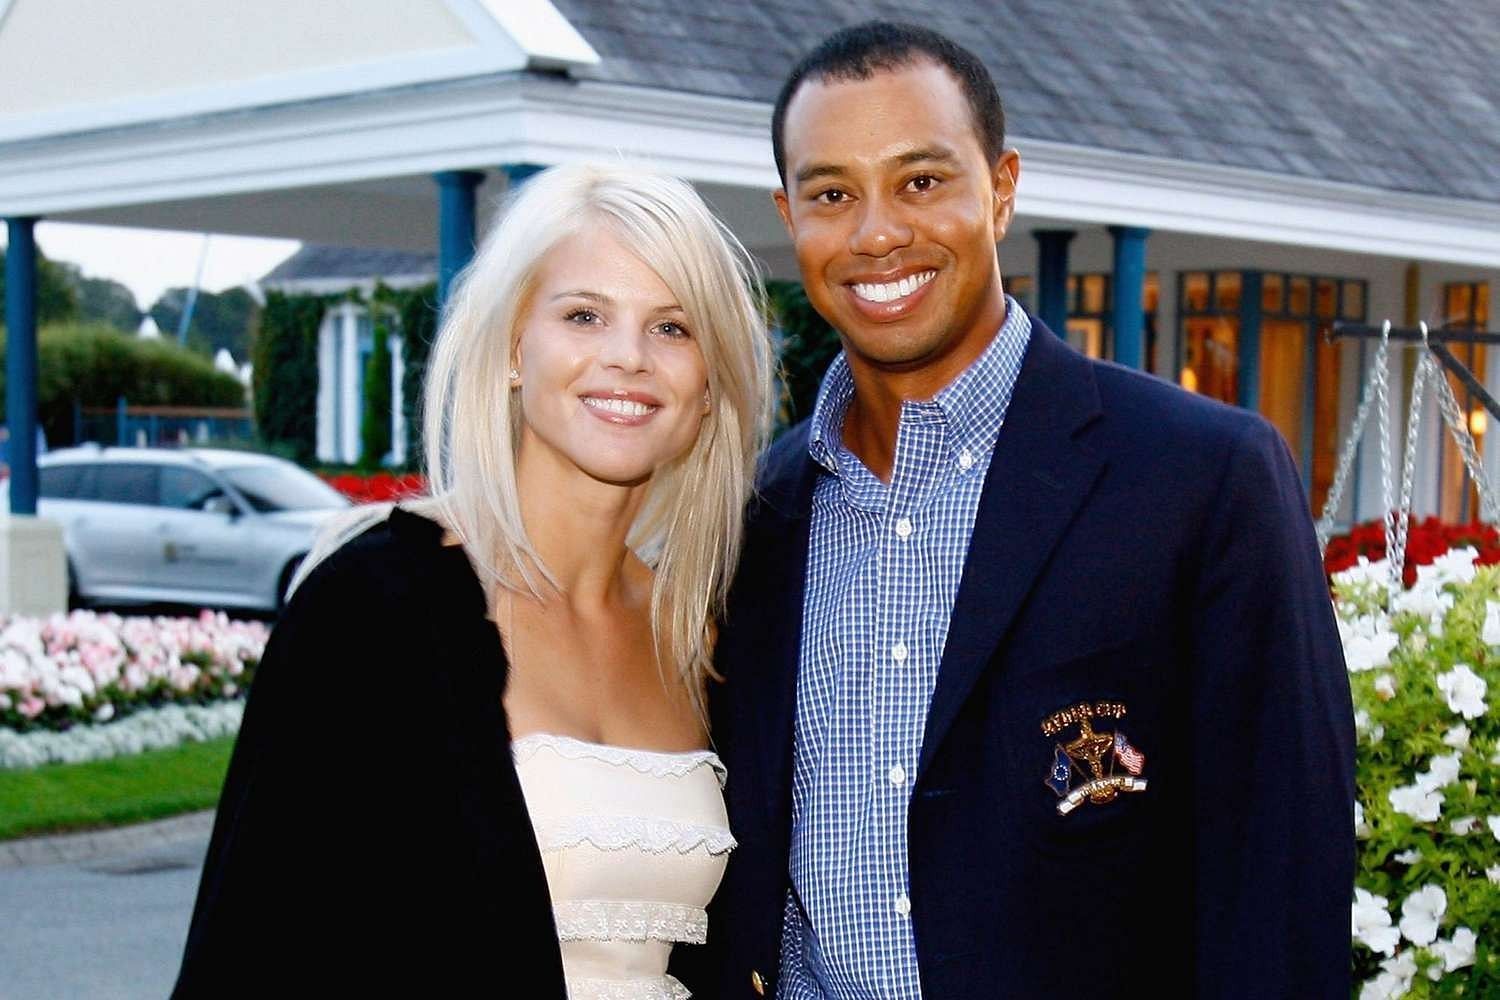 Tiger Woods lost over $750 million after his divorce from Elin Nordegren